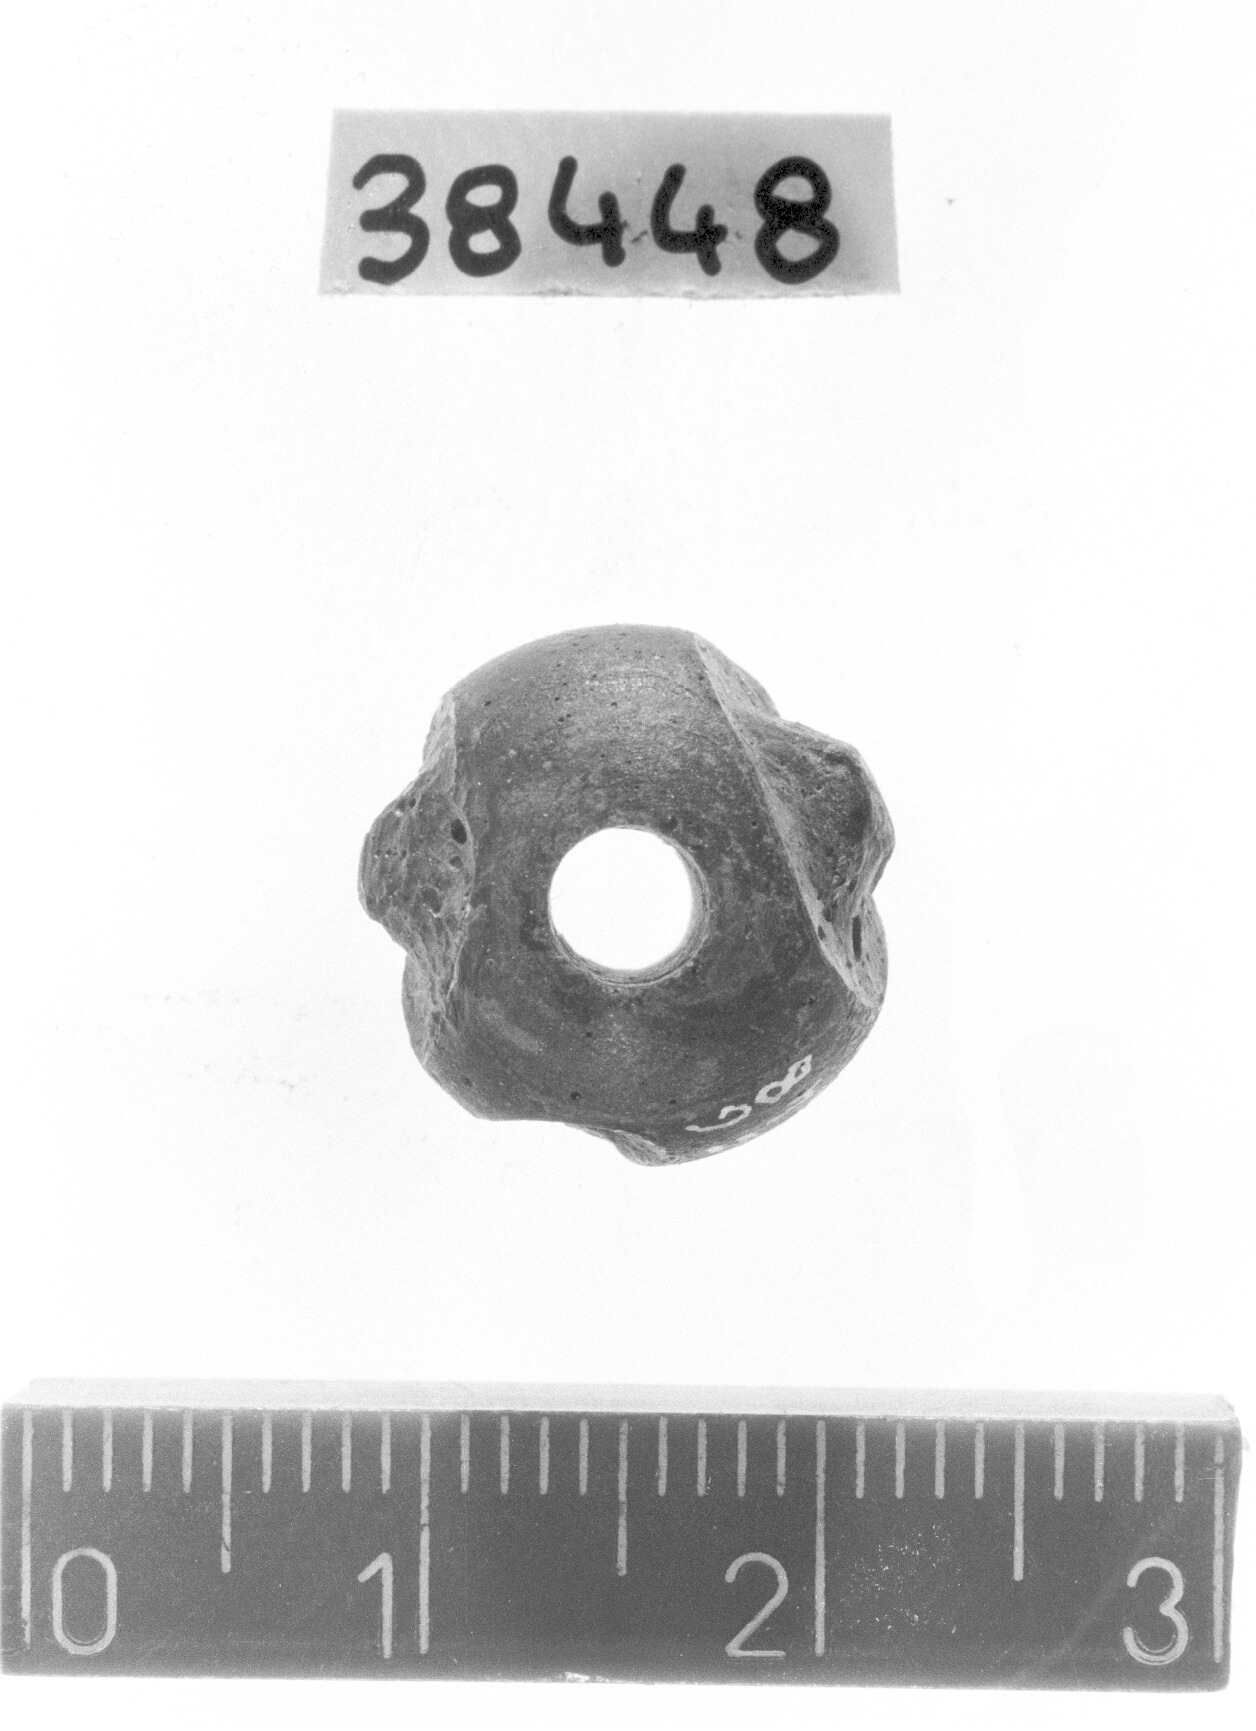 vago - Piceno I-II (secc. IX-VIII a.C)